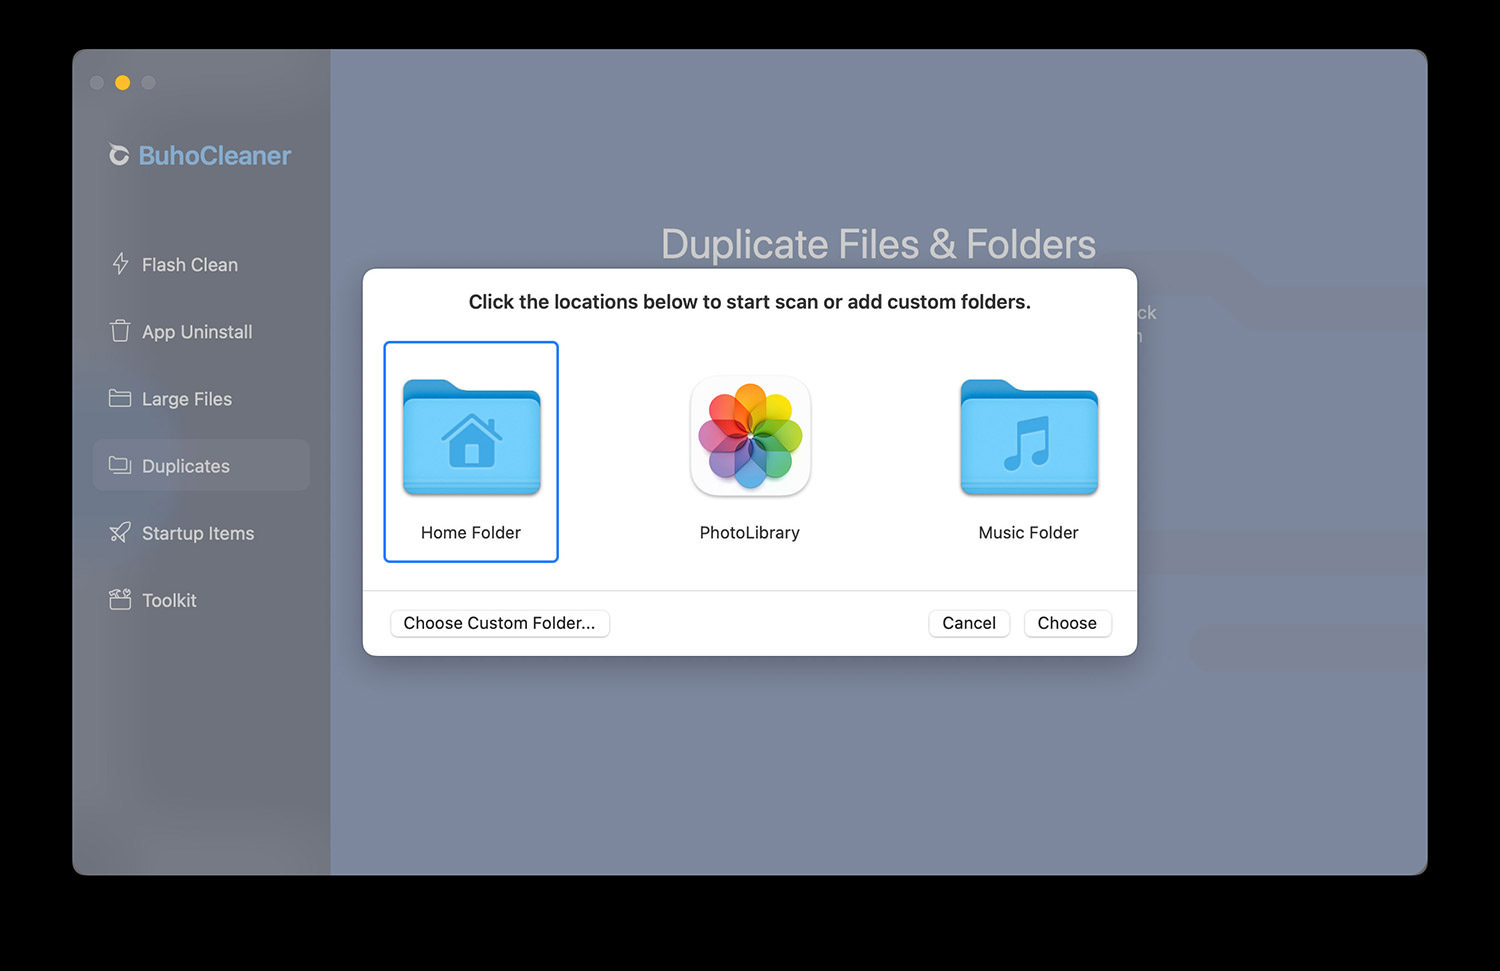 BuhoCleaner duplicated files